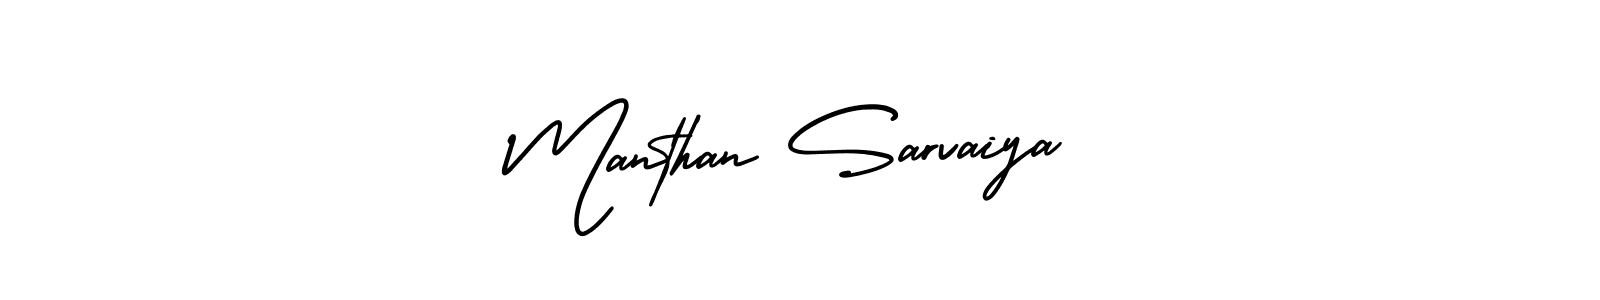 How to Draw Manthan Sarvaiya signature style? AmerikaSignatureDemo-Regular is a latest design signature styles for name Manthan Sarvaiya. Manthan Sarvaiya signature style 3 images and pictures png